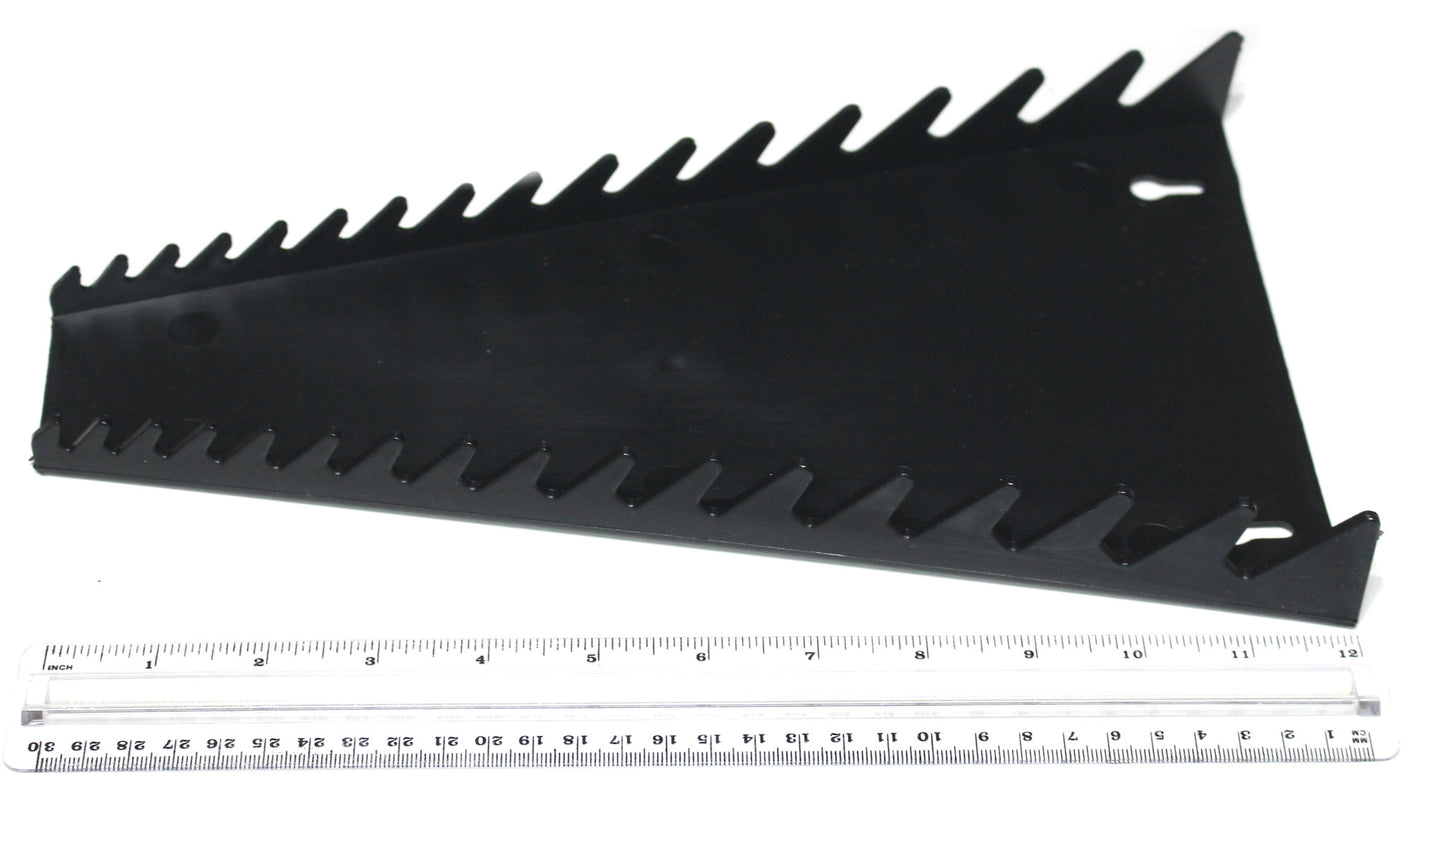 JSP Manufacturing Standard 16-Tool Wrench Plastic Organizer / Heavy duty - Black